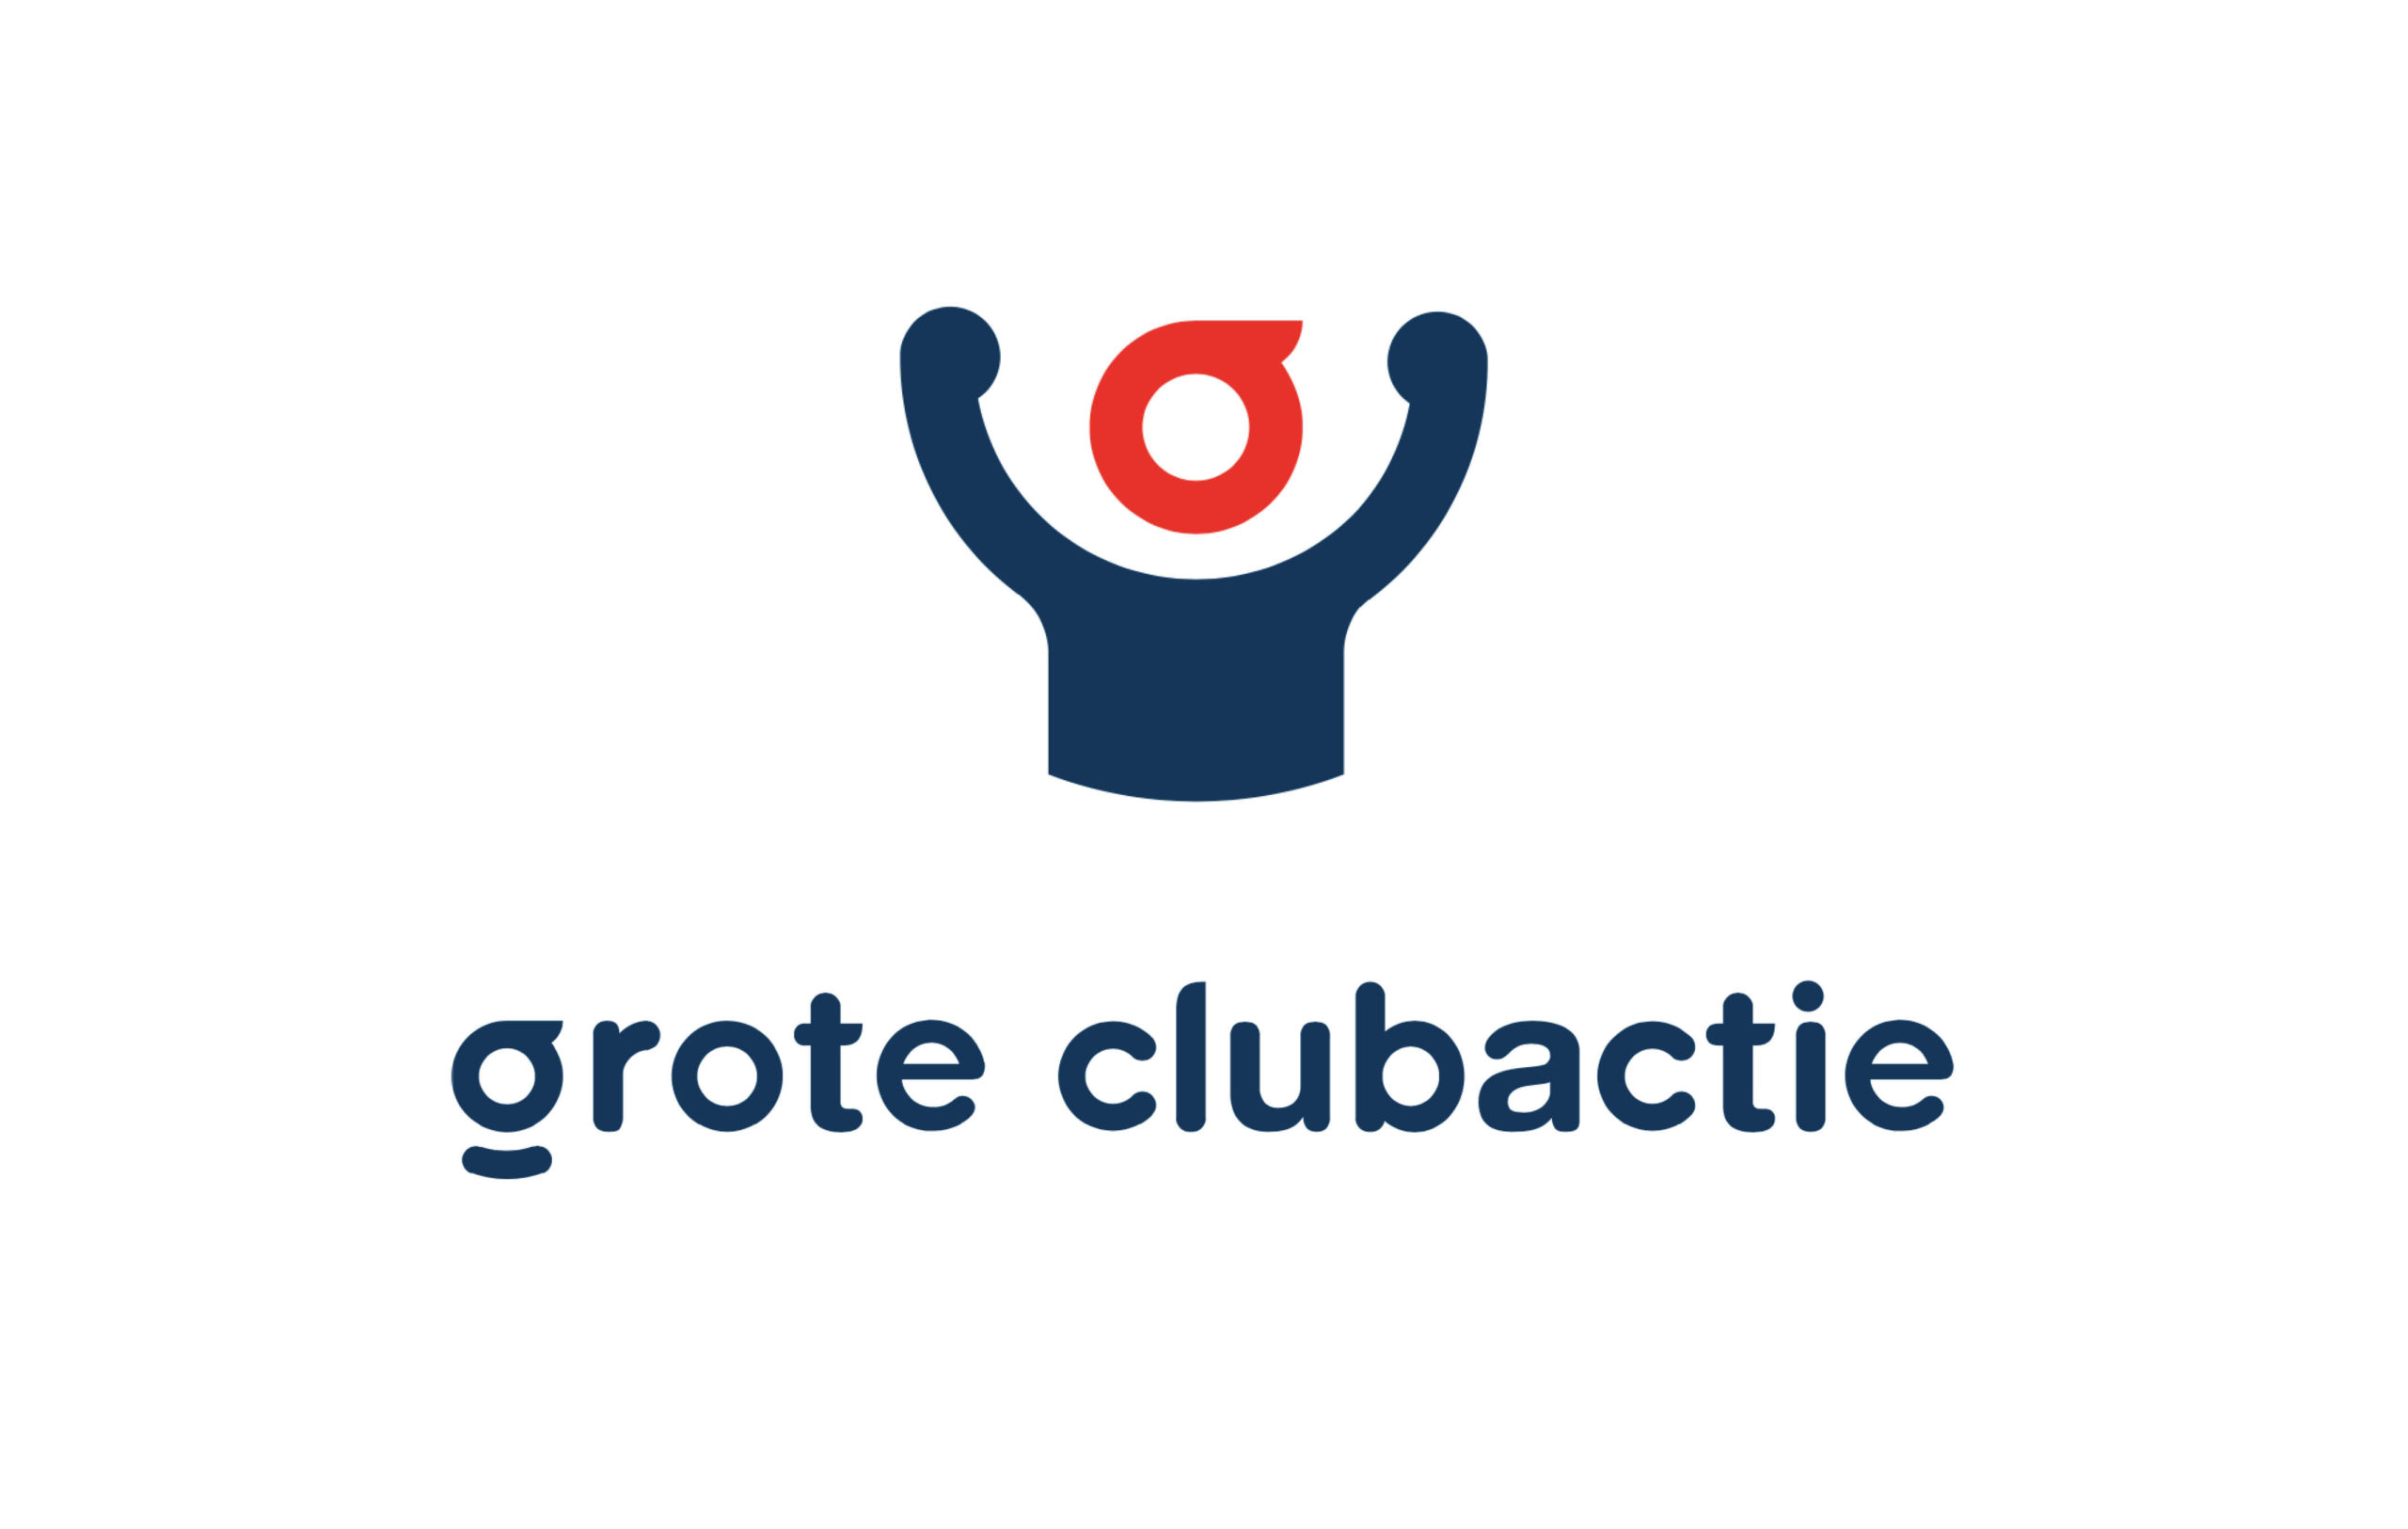 Grote Clubactie logo